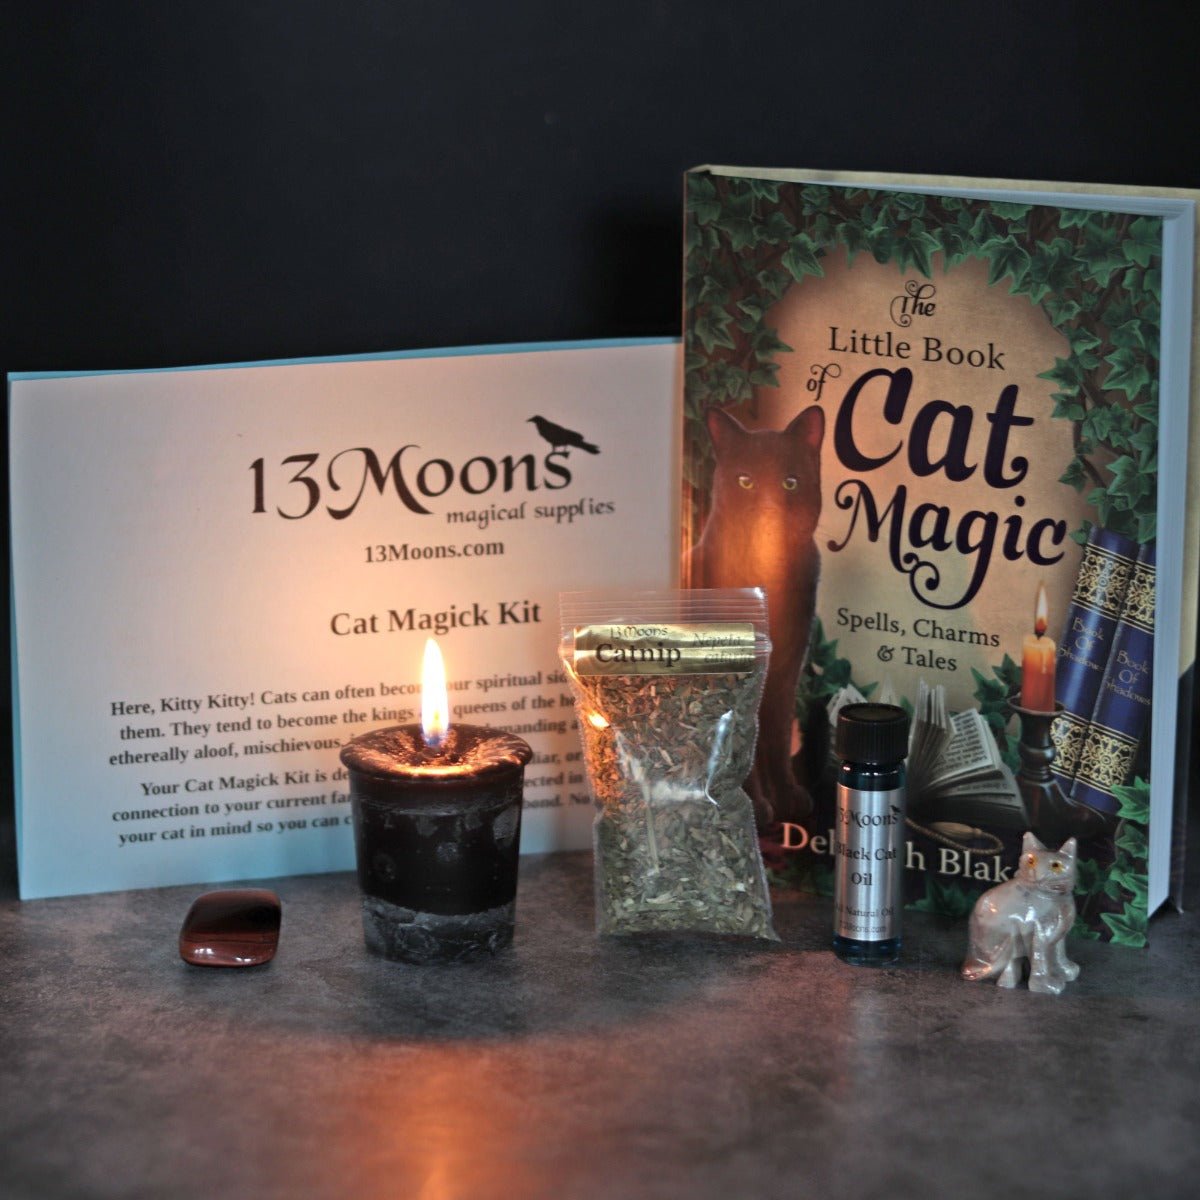 Cat Magick Kit - 13 Moons